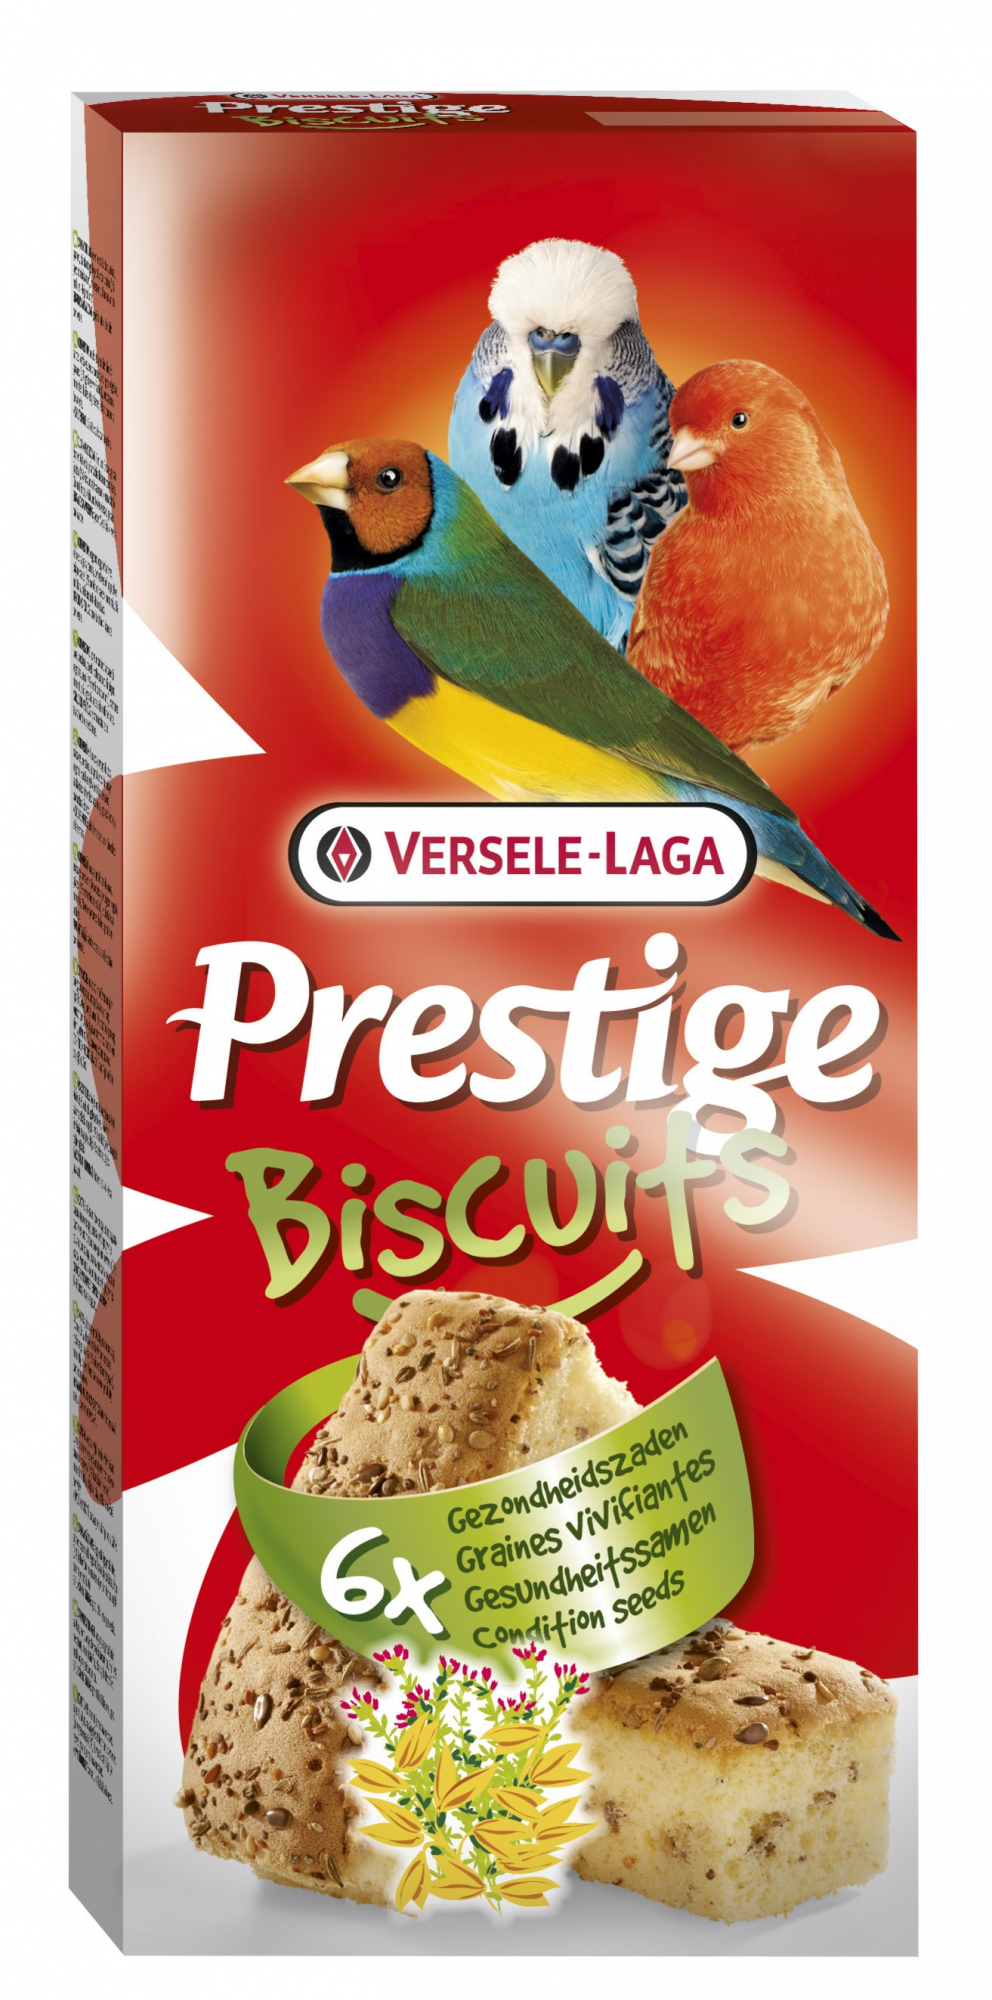 Biscuits Belebendes Saatgut für alle Vögel